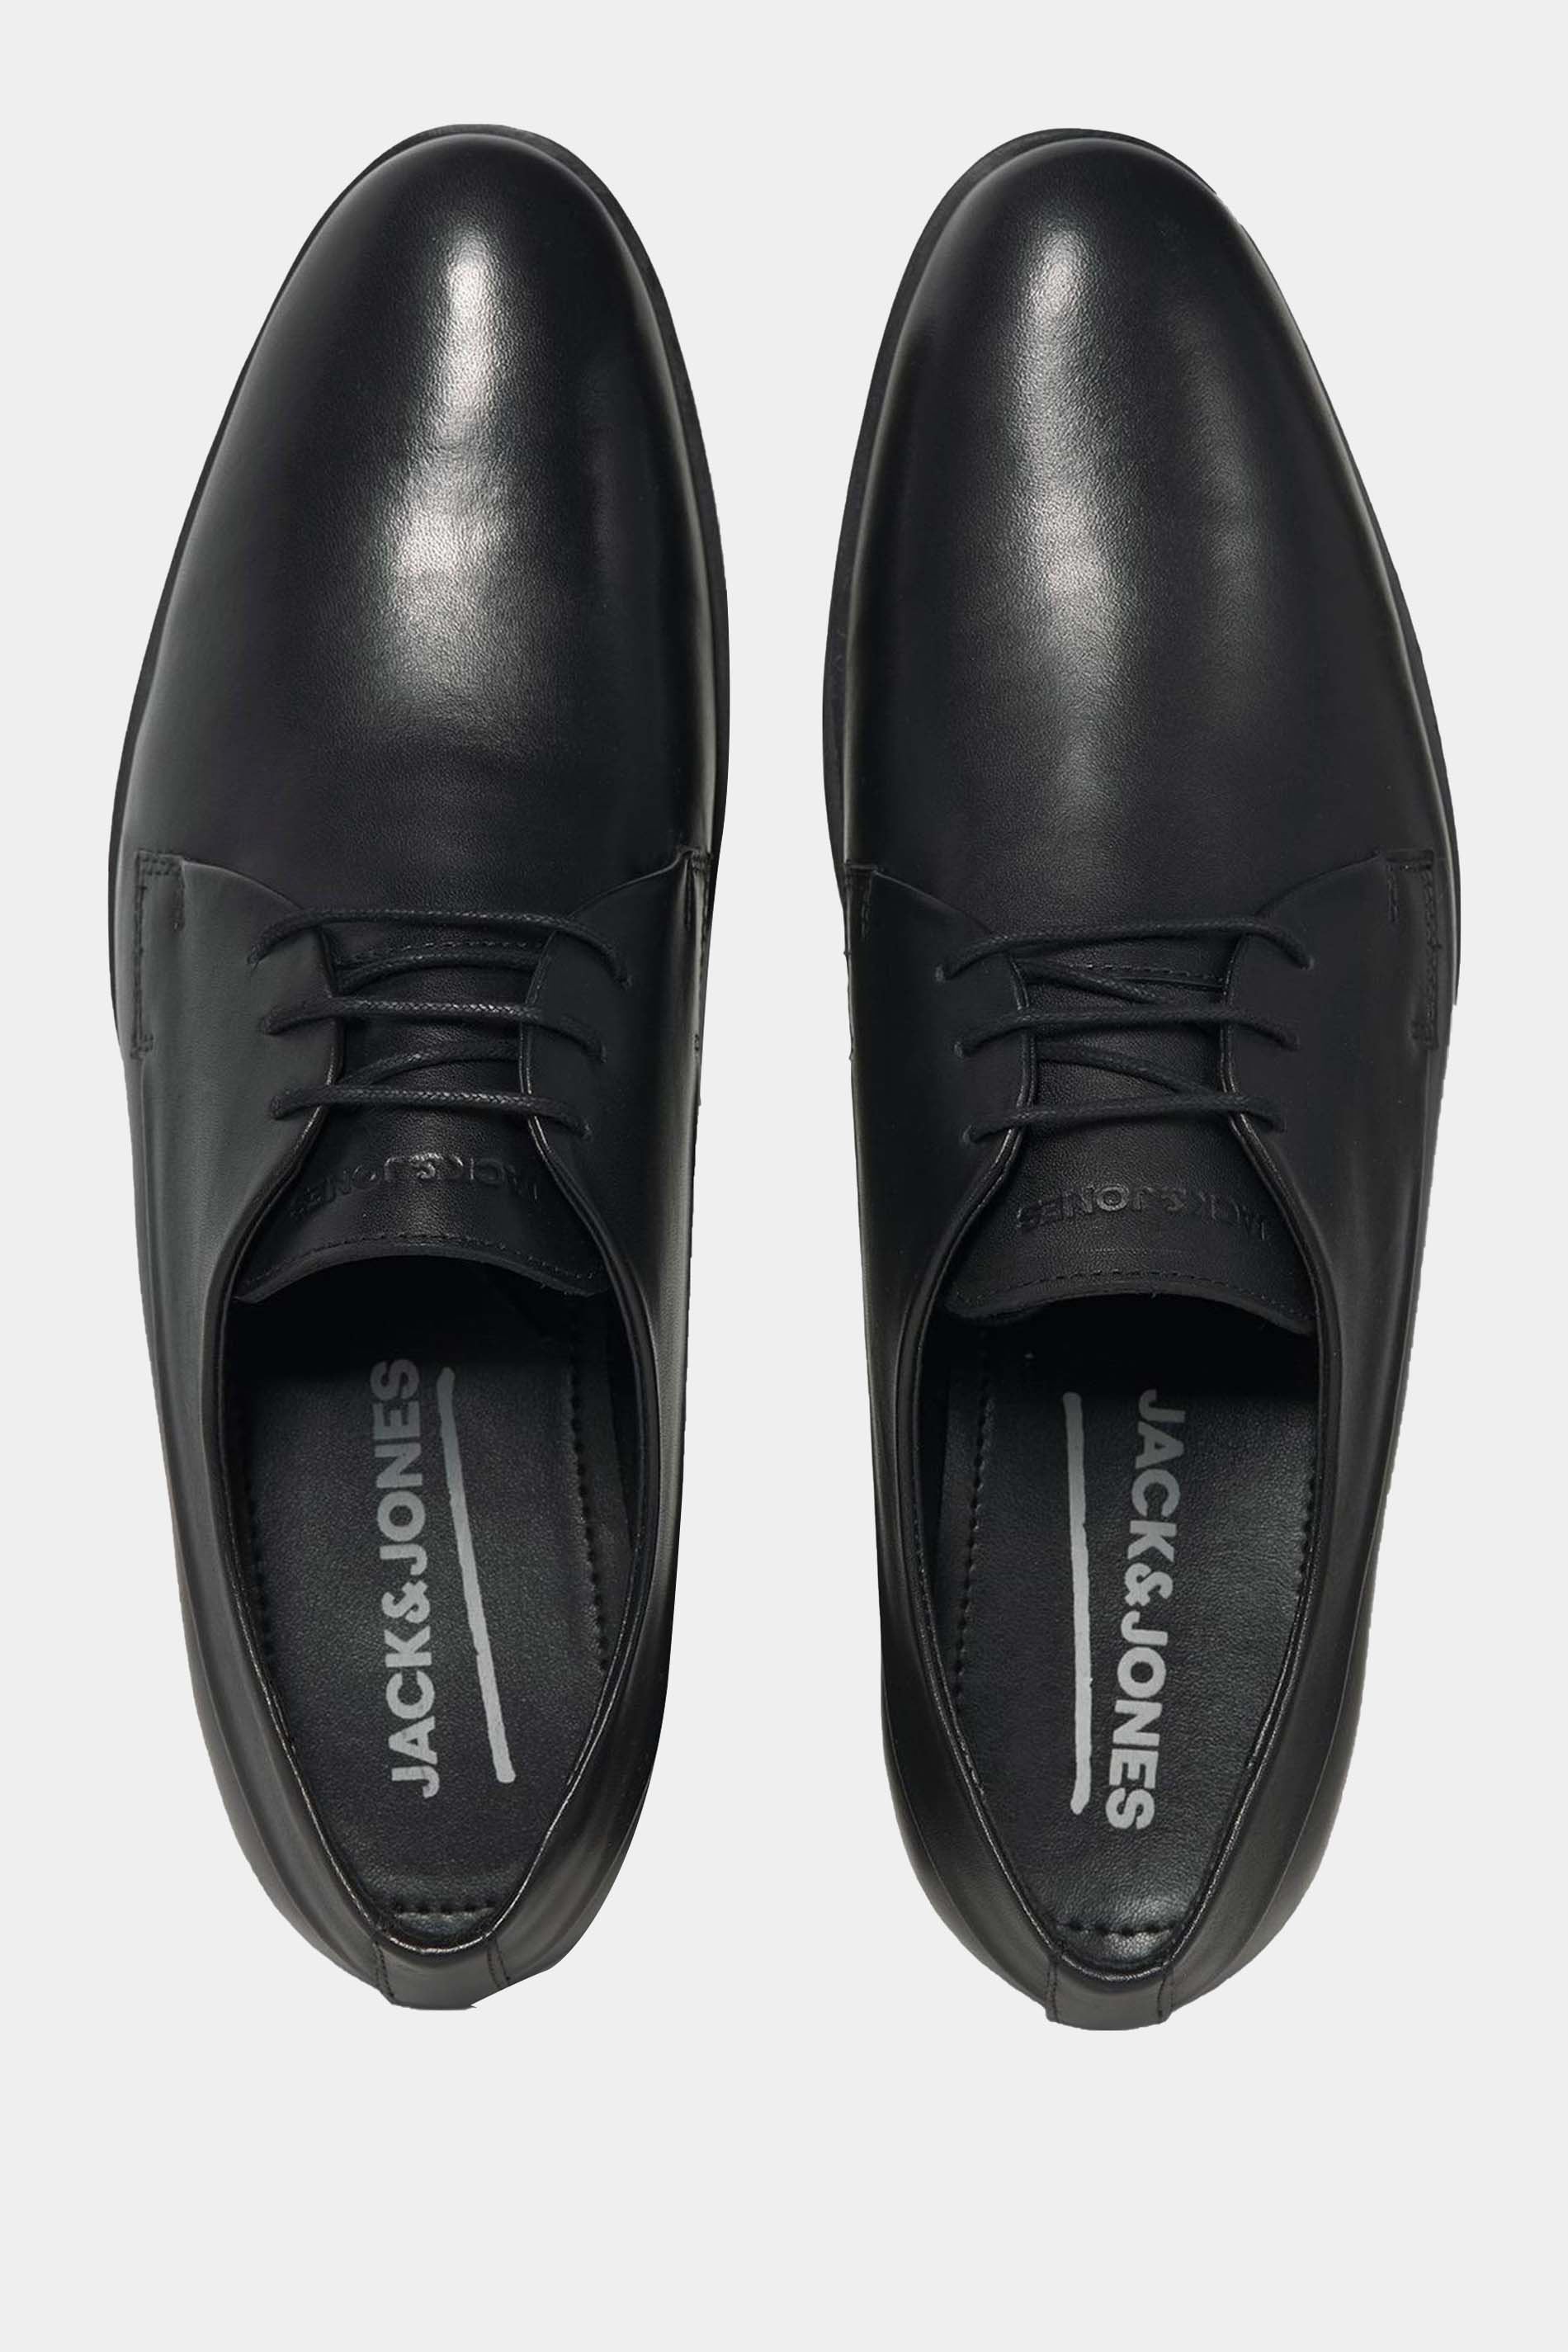 JACK & JONES Big & Tall Black Leather Lace Smart Shoes | BadRhino  3